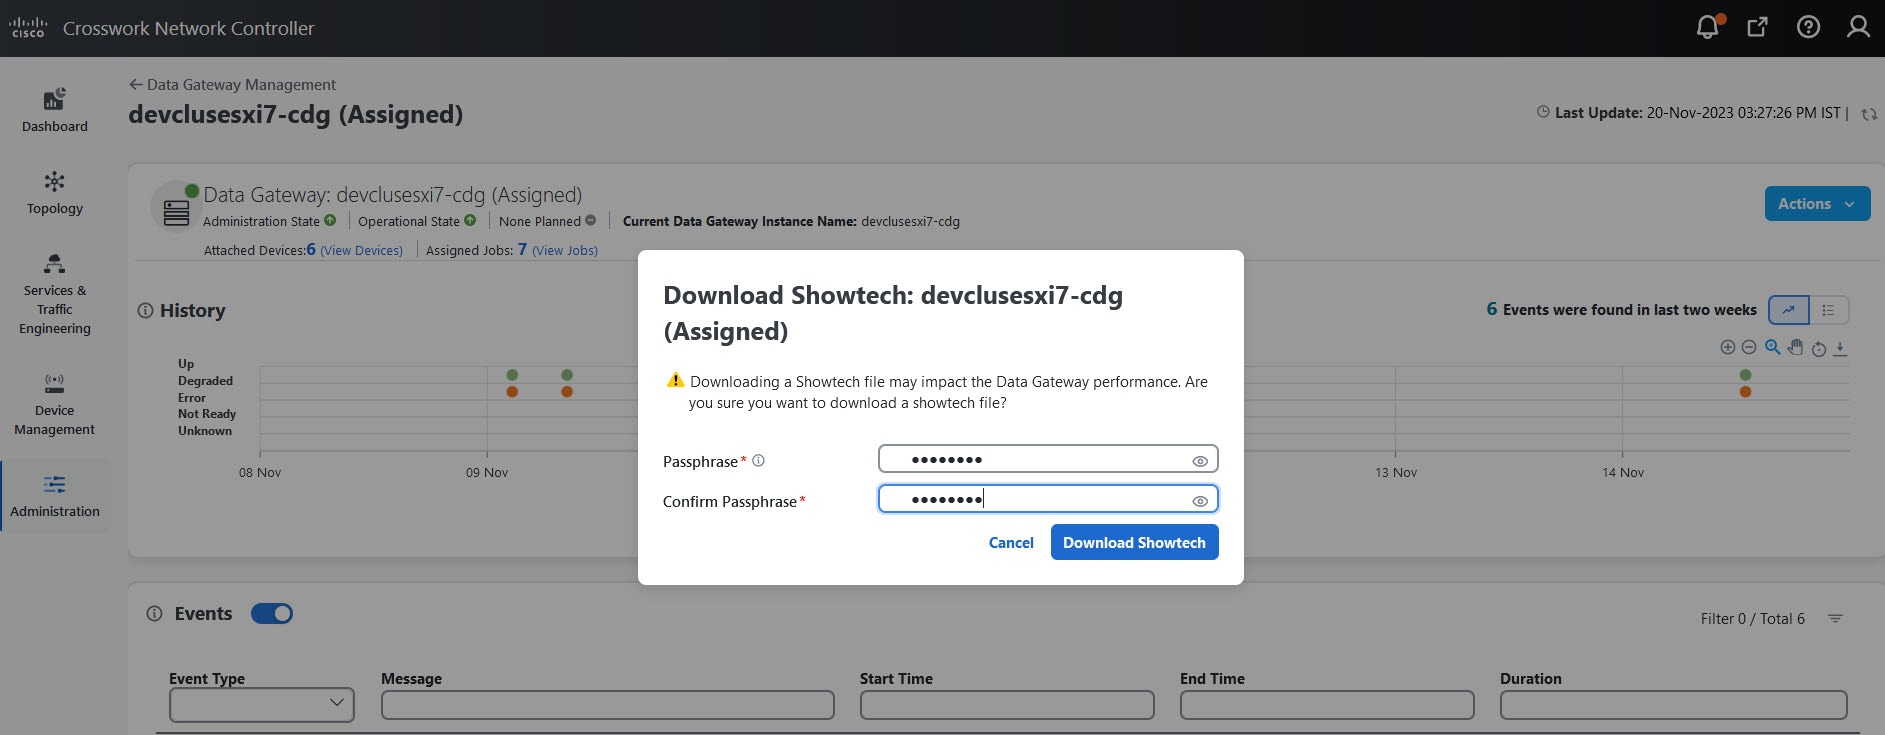 Download Showtech Popup Window